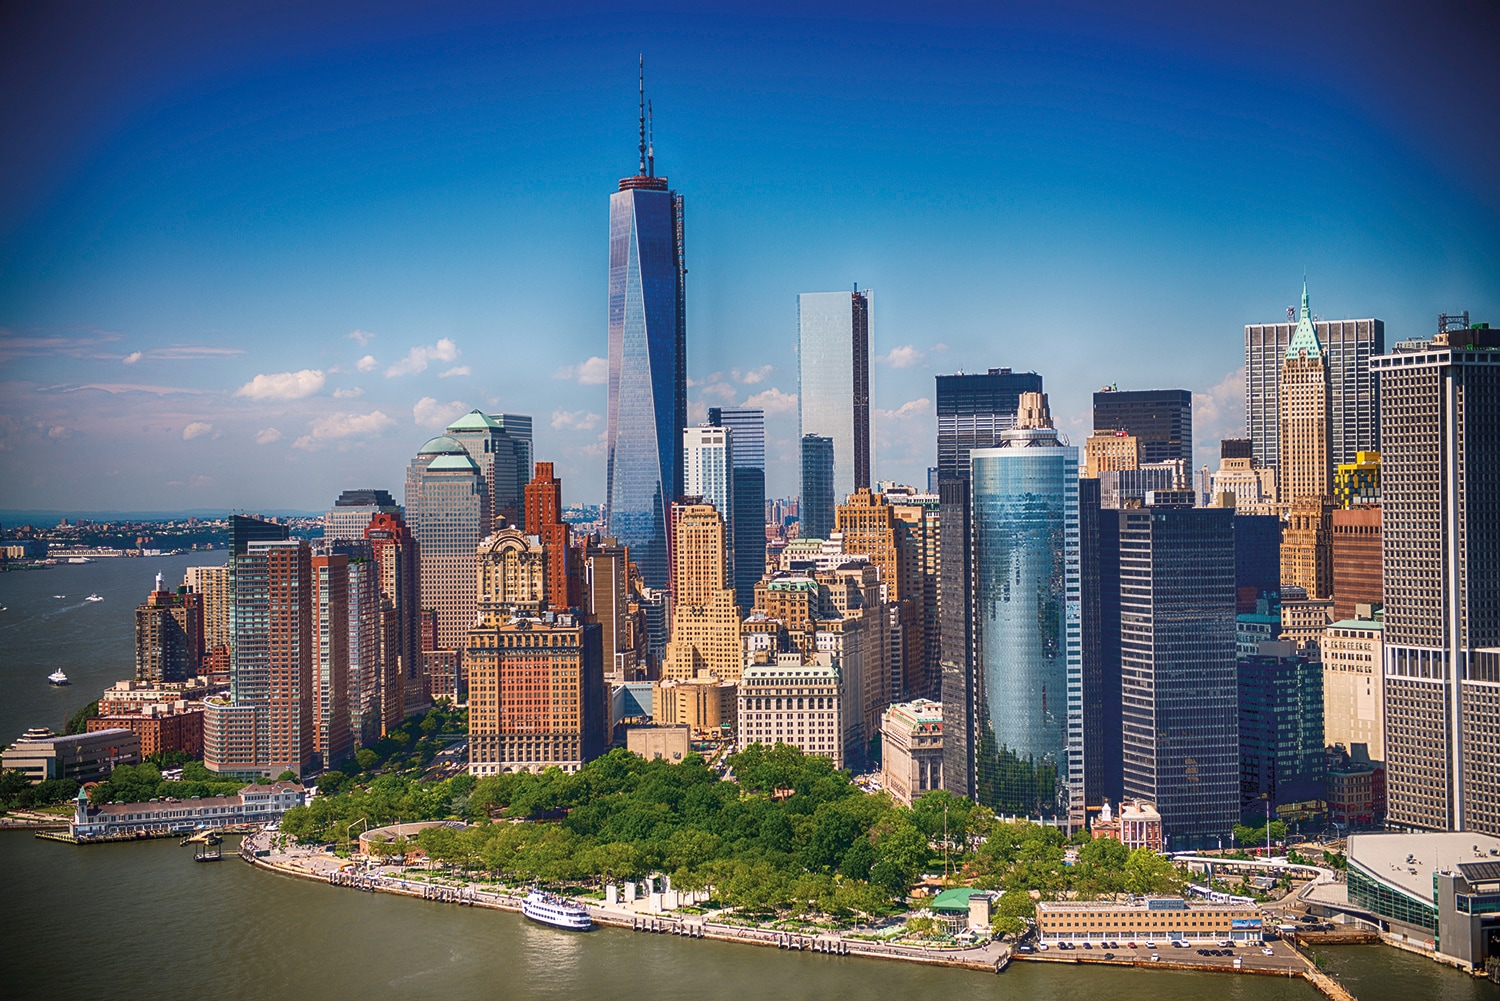 Papermoon Fototapete "Lower Manhattan Skyline"